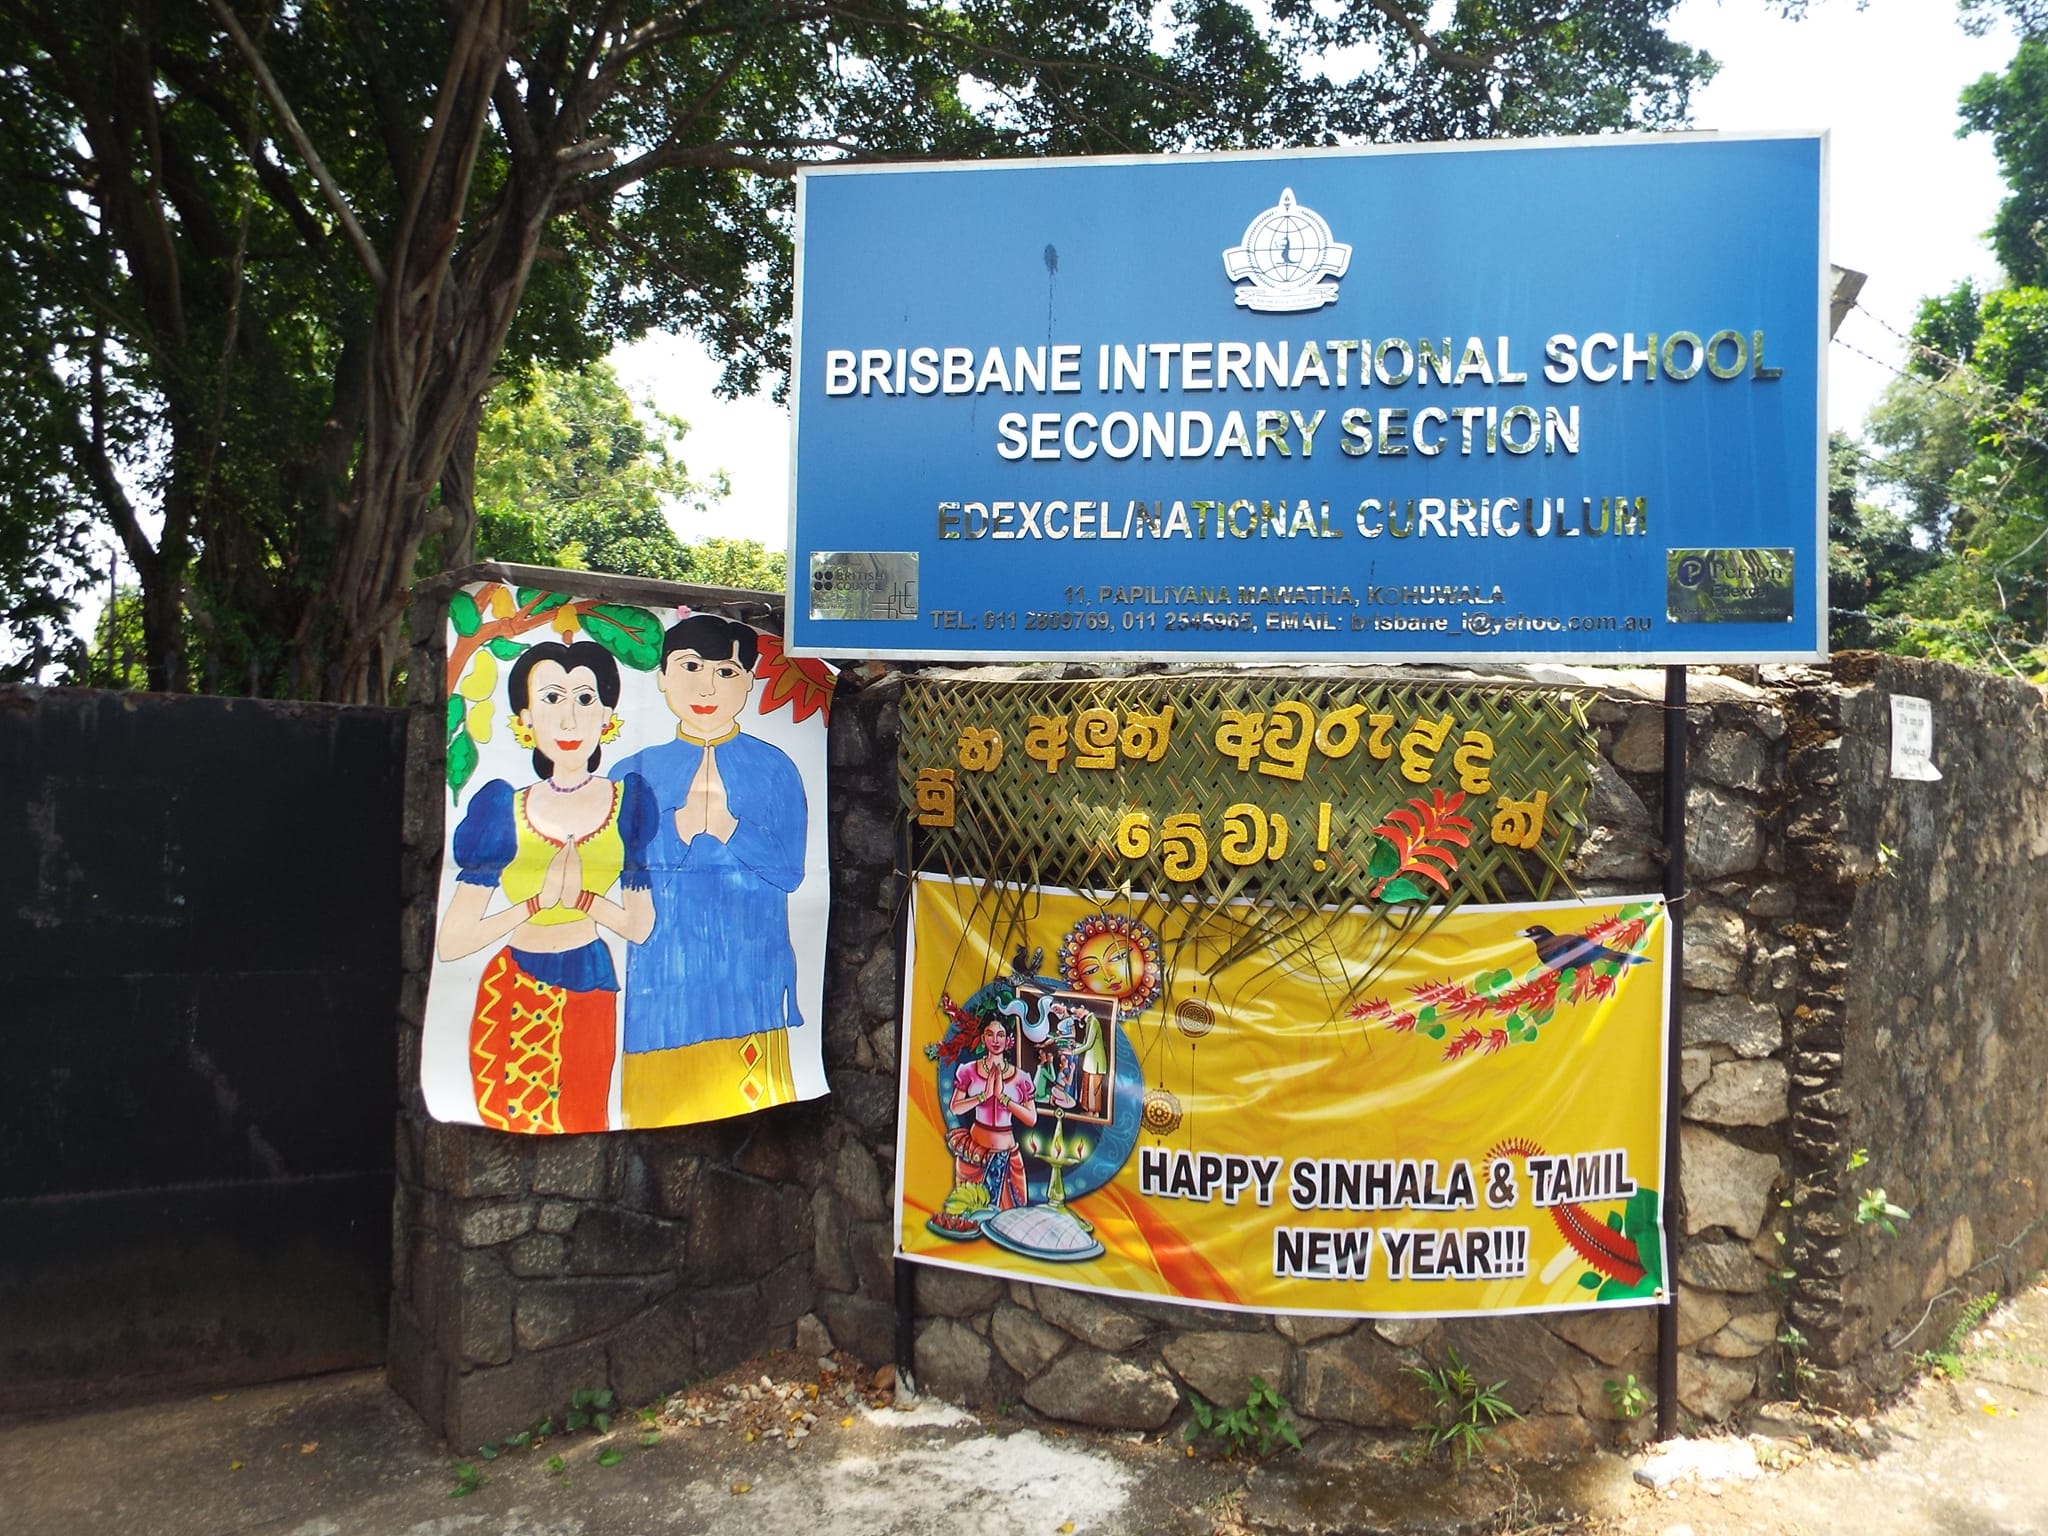  Brisbane International School celebrated the Sinhala and Hindu New Year